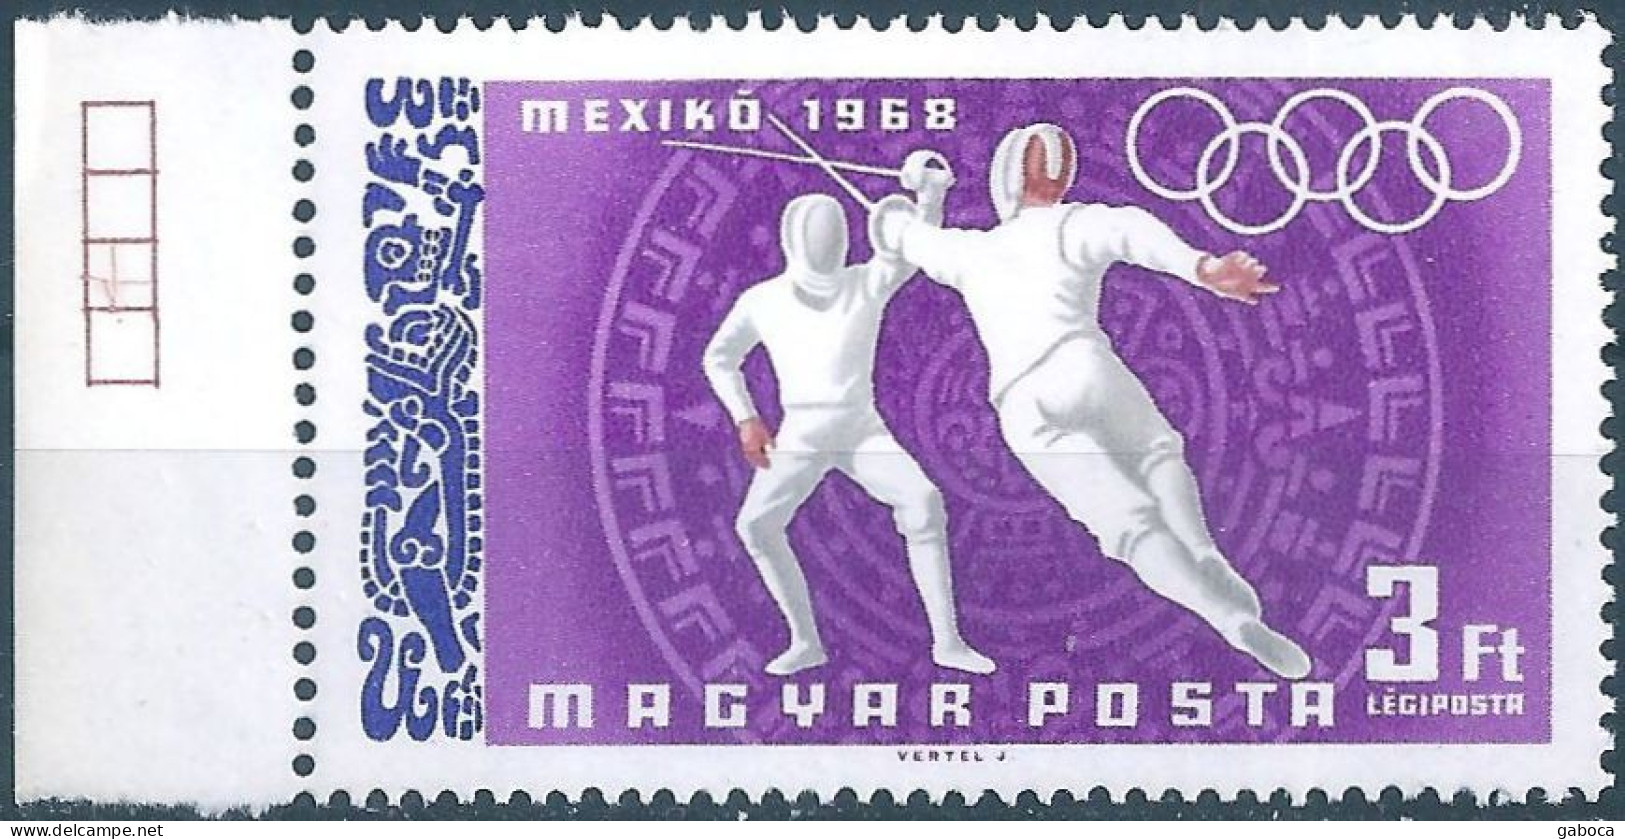 C5863 Hungary Olympics Mexico Sport Fencing MNH RARE - Ete 1968: Mexico